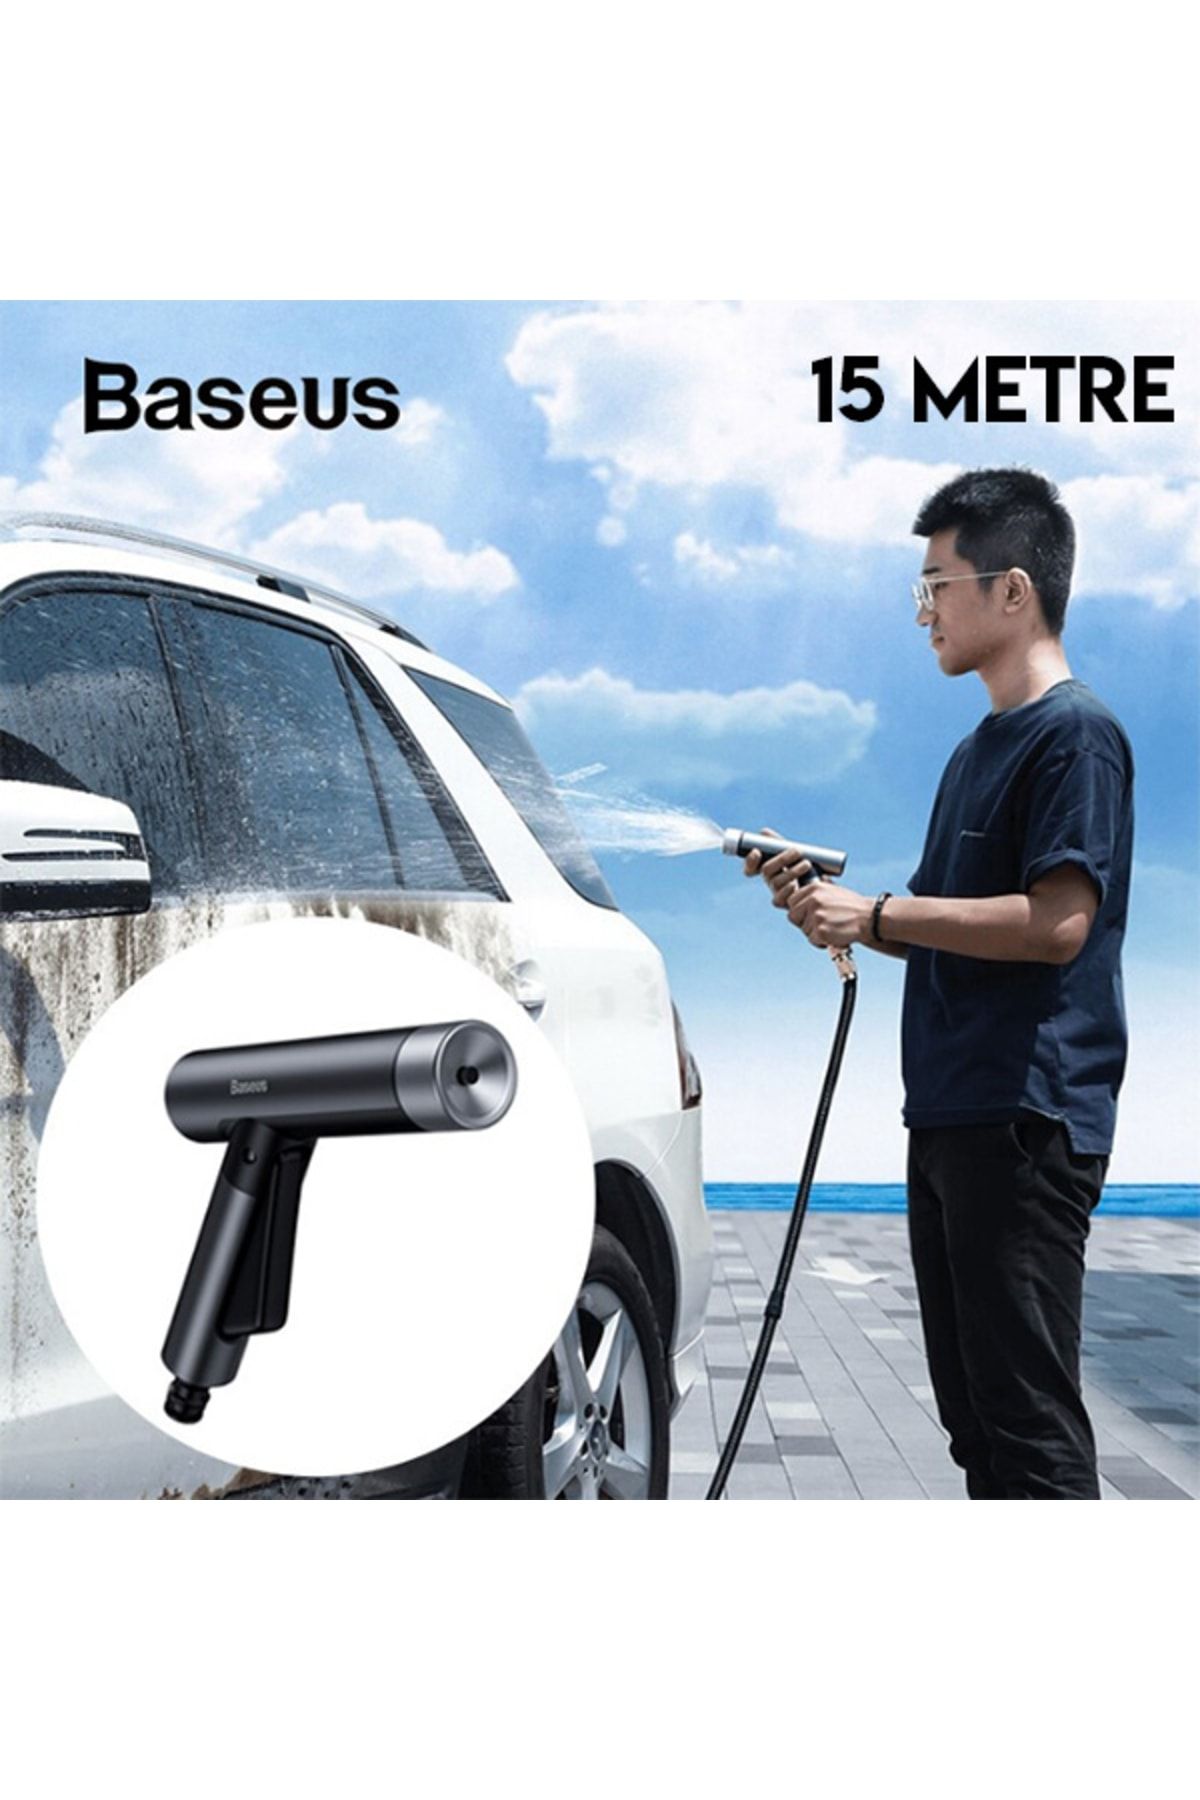 Baseus 15 Metre Sihirli Araç Yıkama Bahçe Sulama Hortumu Simple Life Car Wash Spray Nozzle